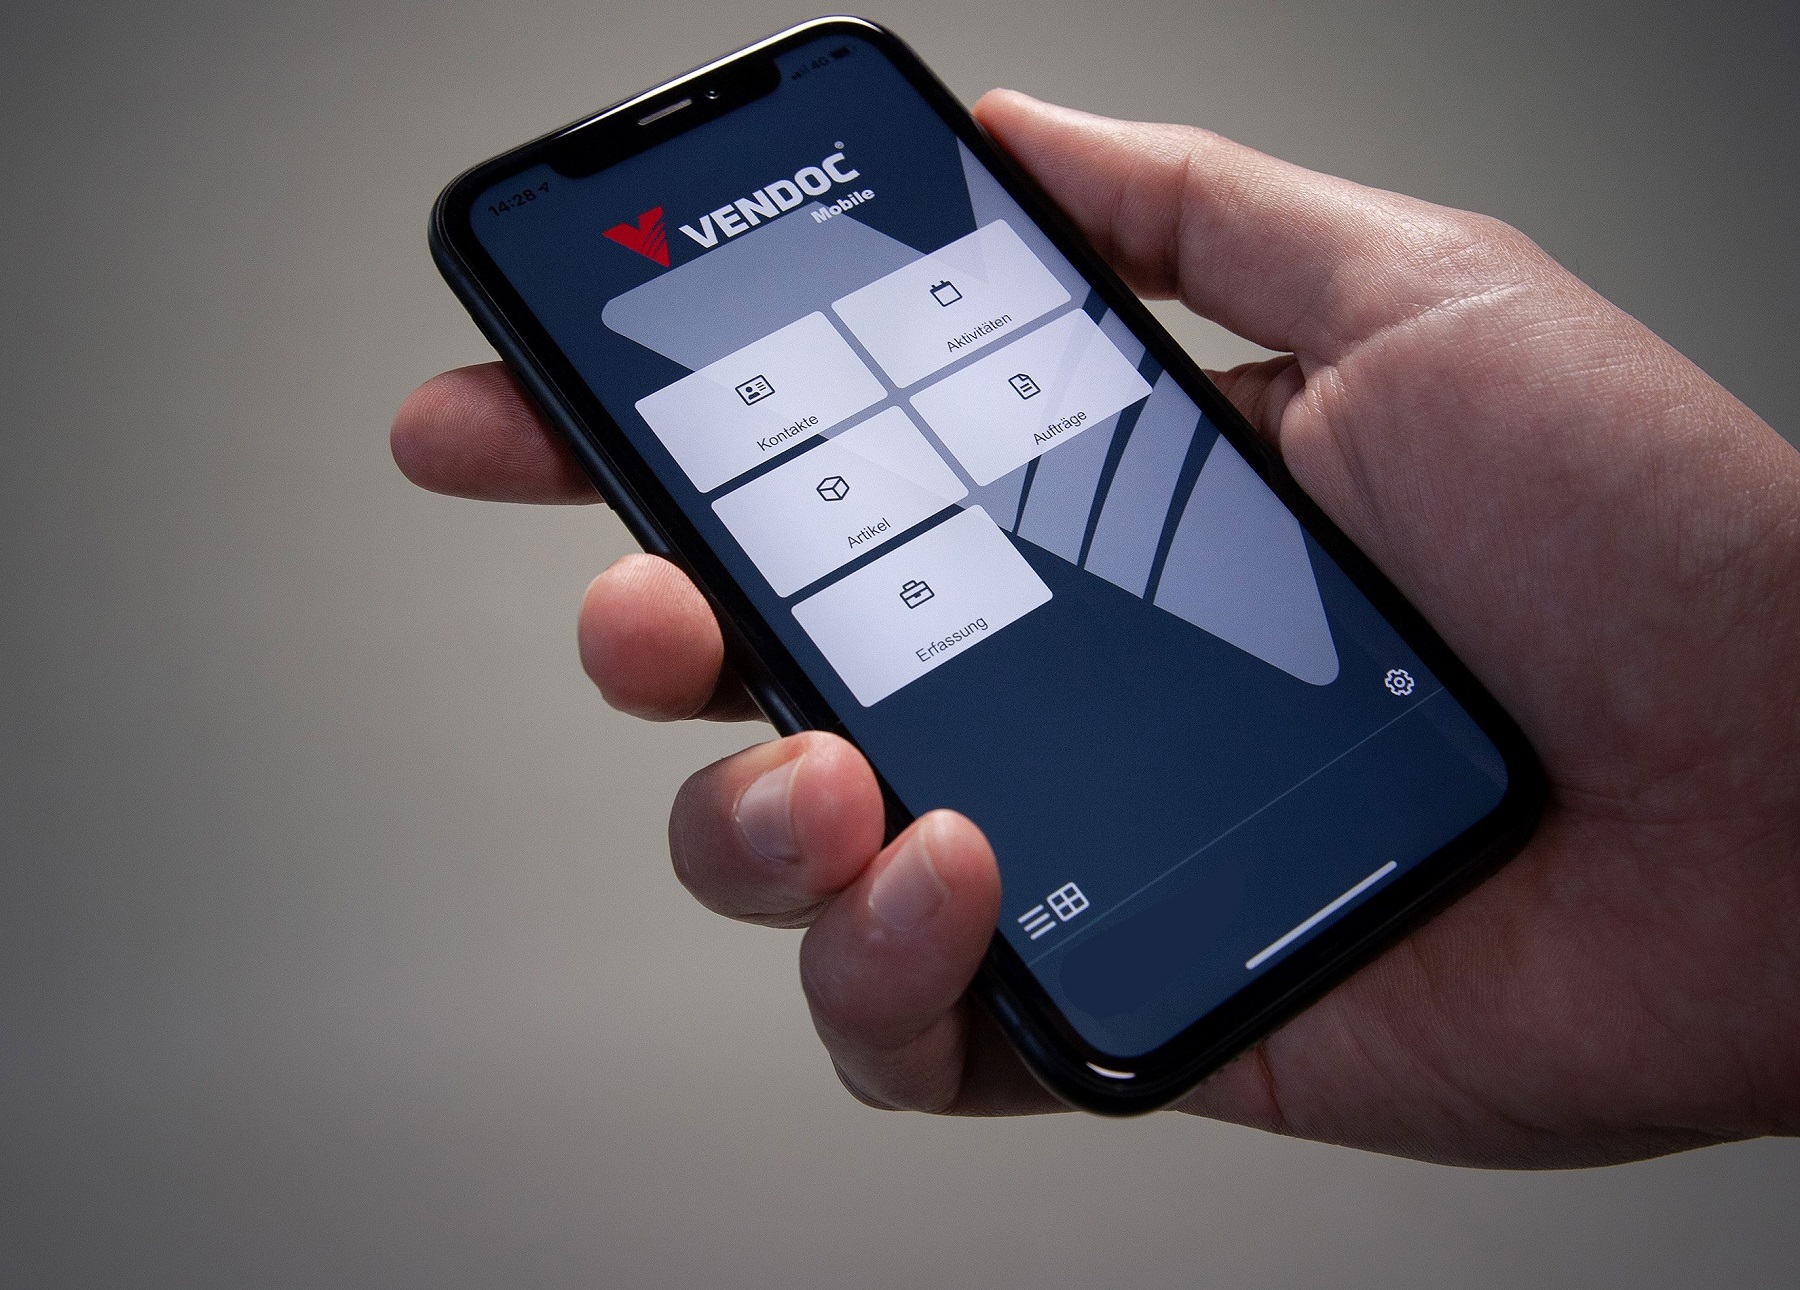 VenDoc Mobile – die neue offlinefähige App